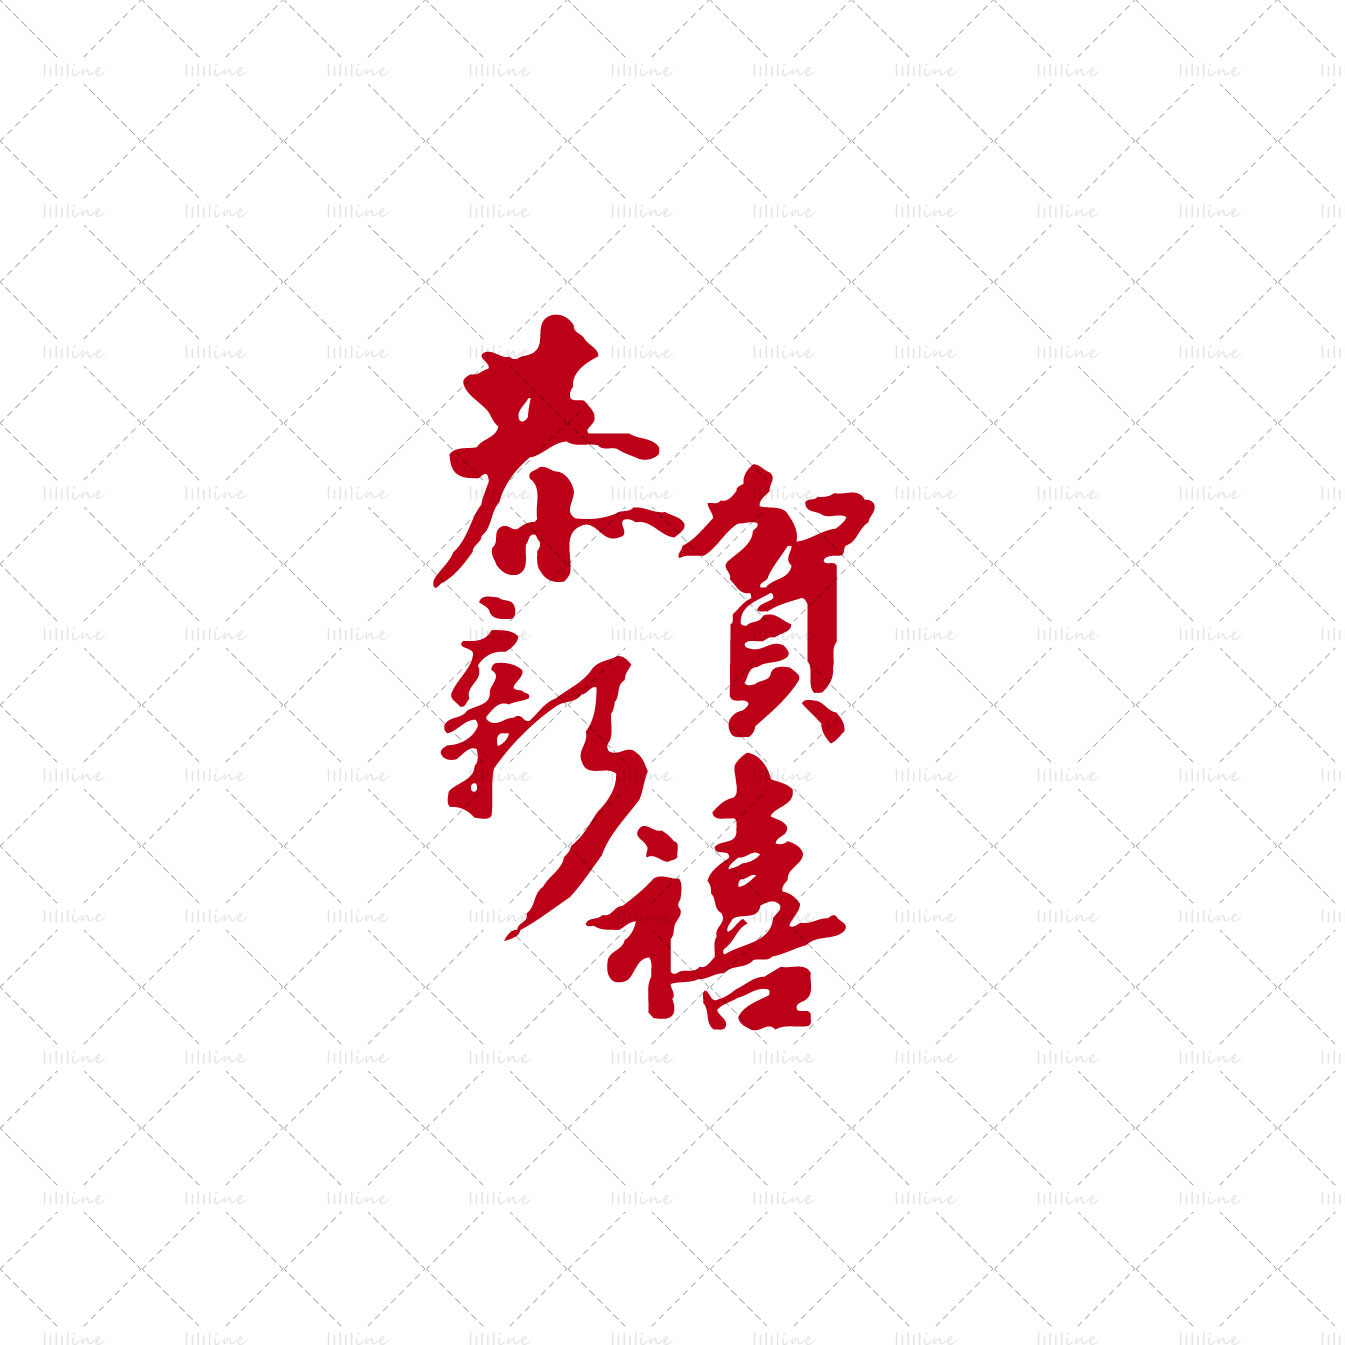 кинеске речи срећна нова година totem tattoo pattern vi eps pdf